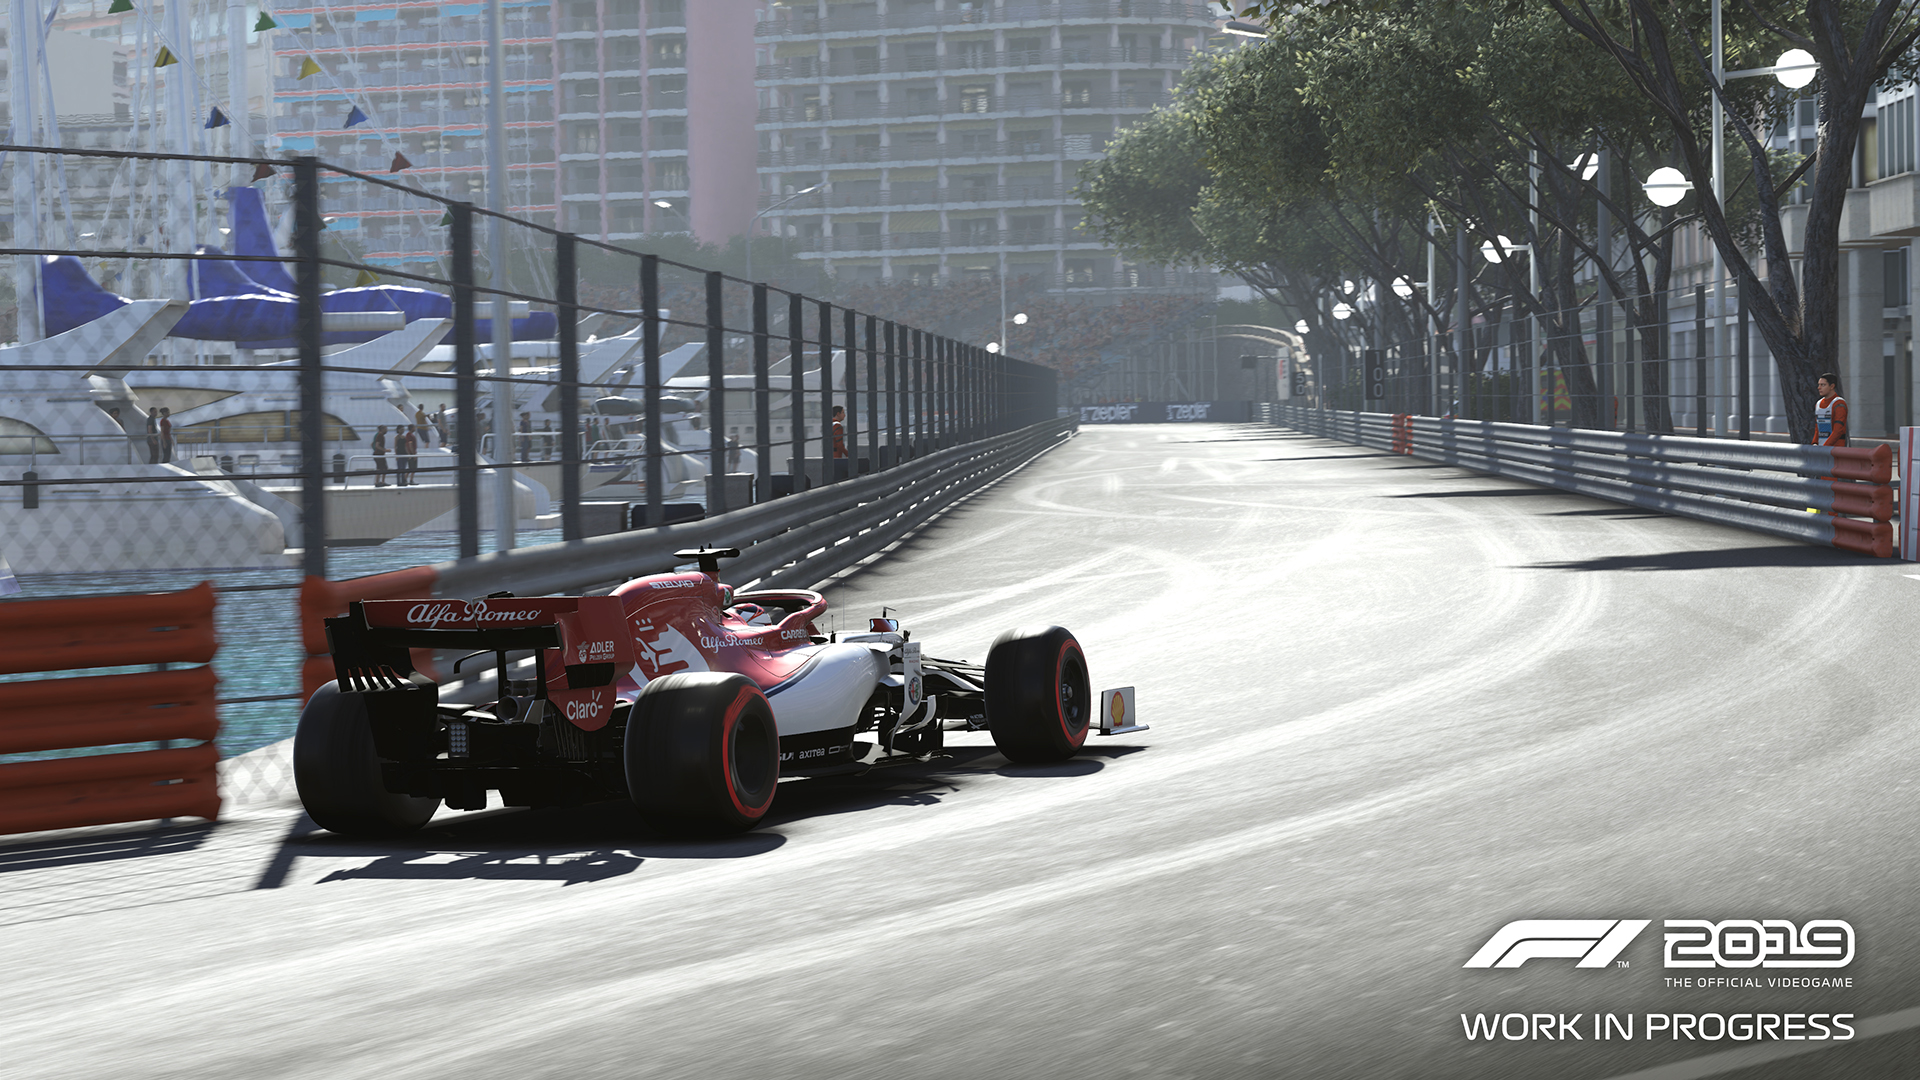 F1 2019: Graphics improvements create stunning step forward